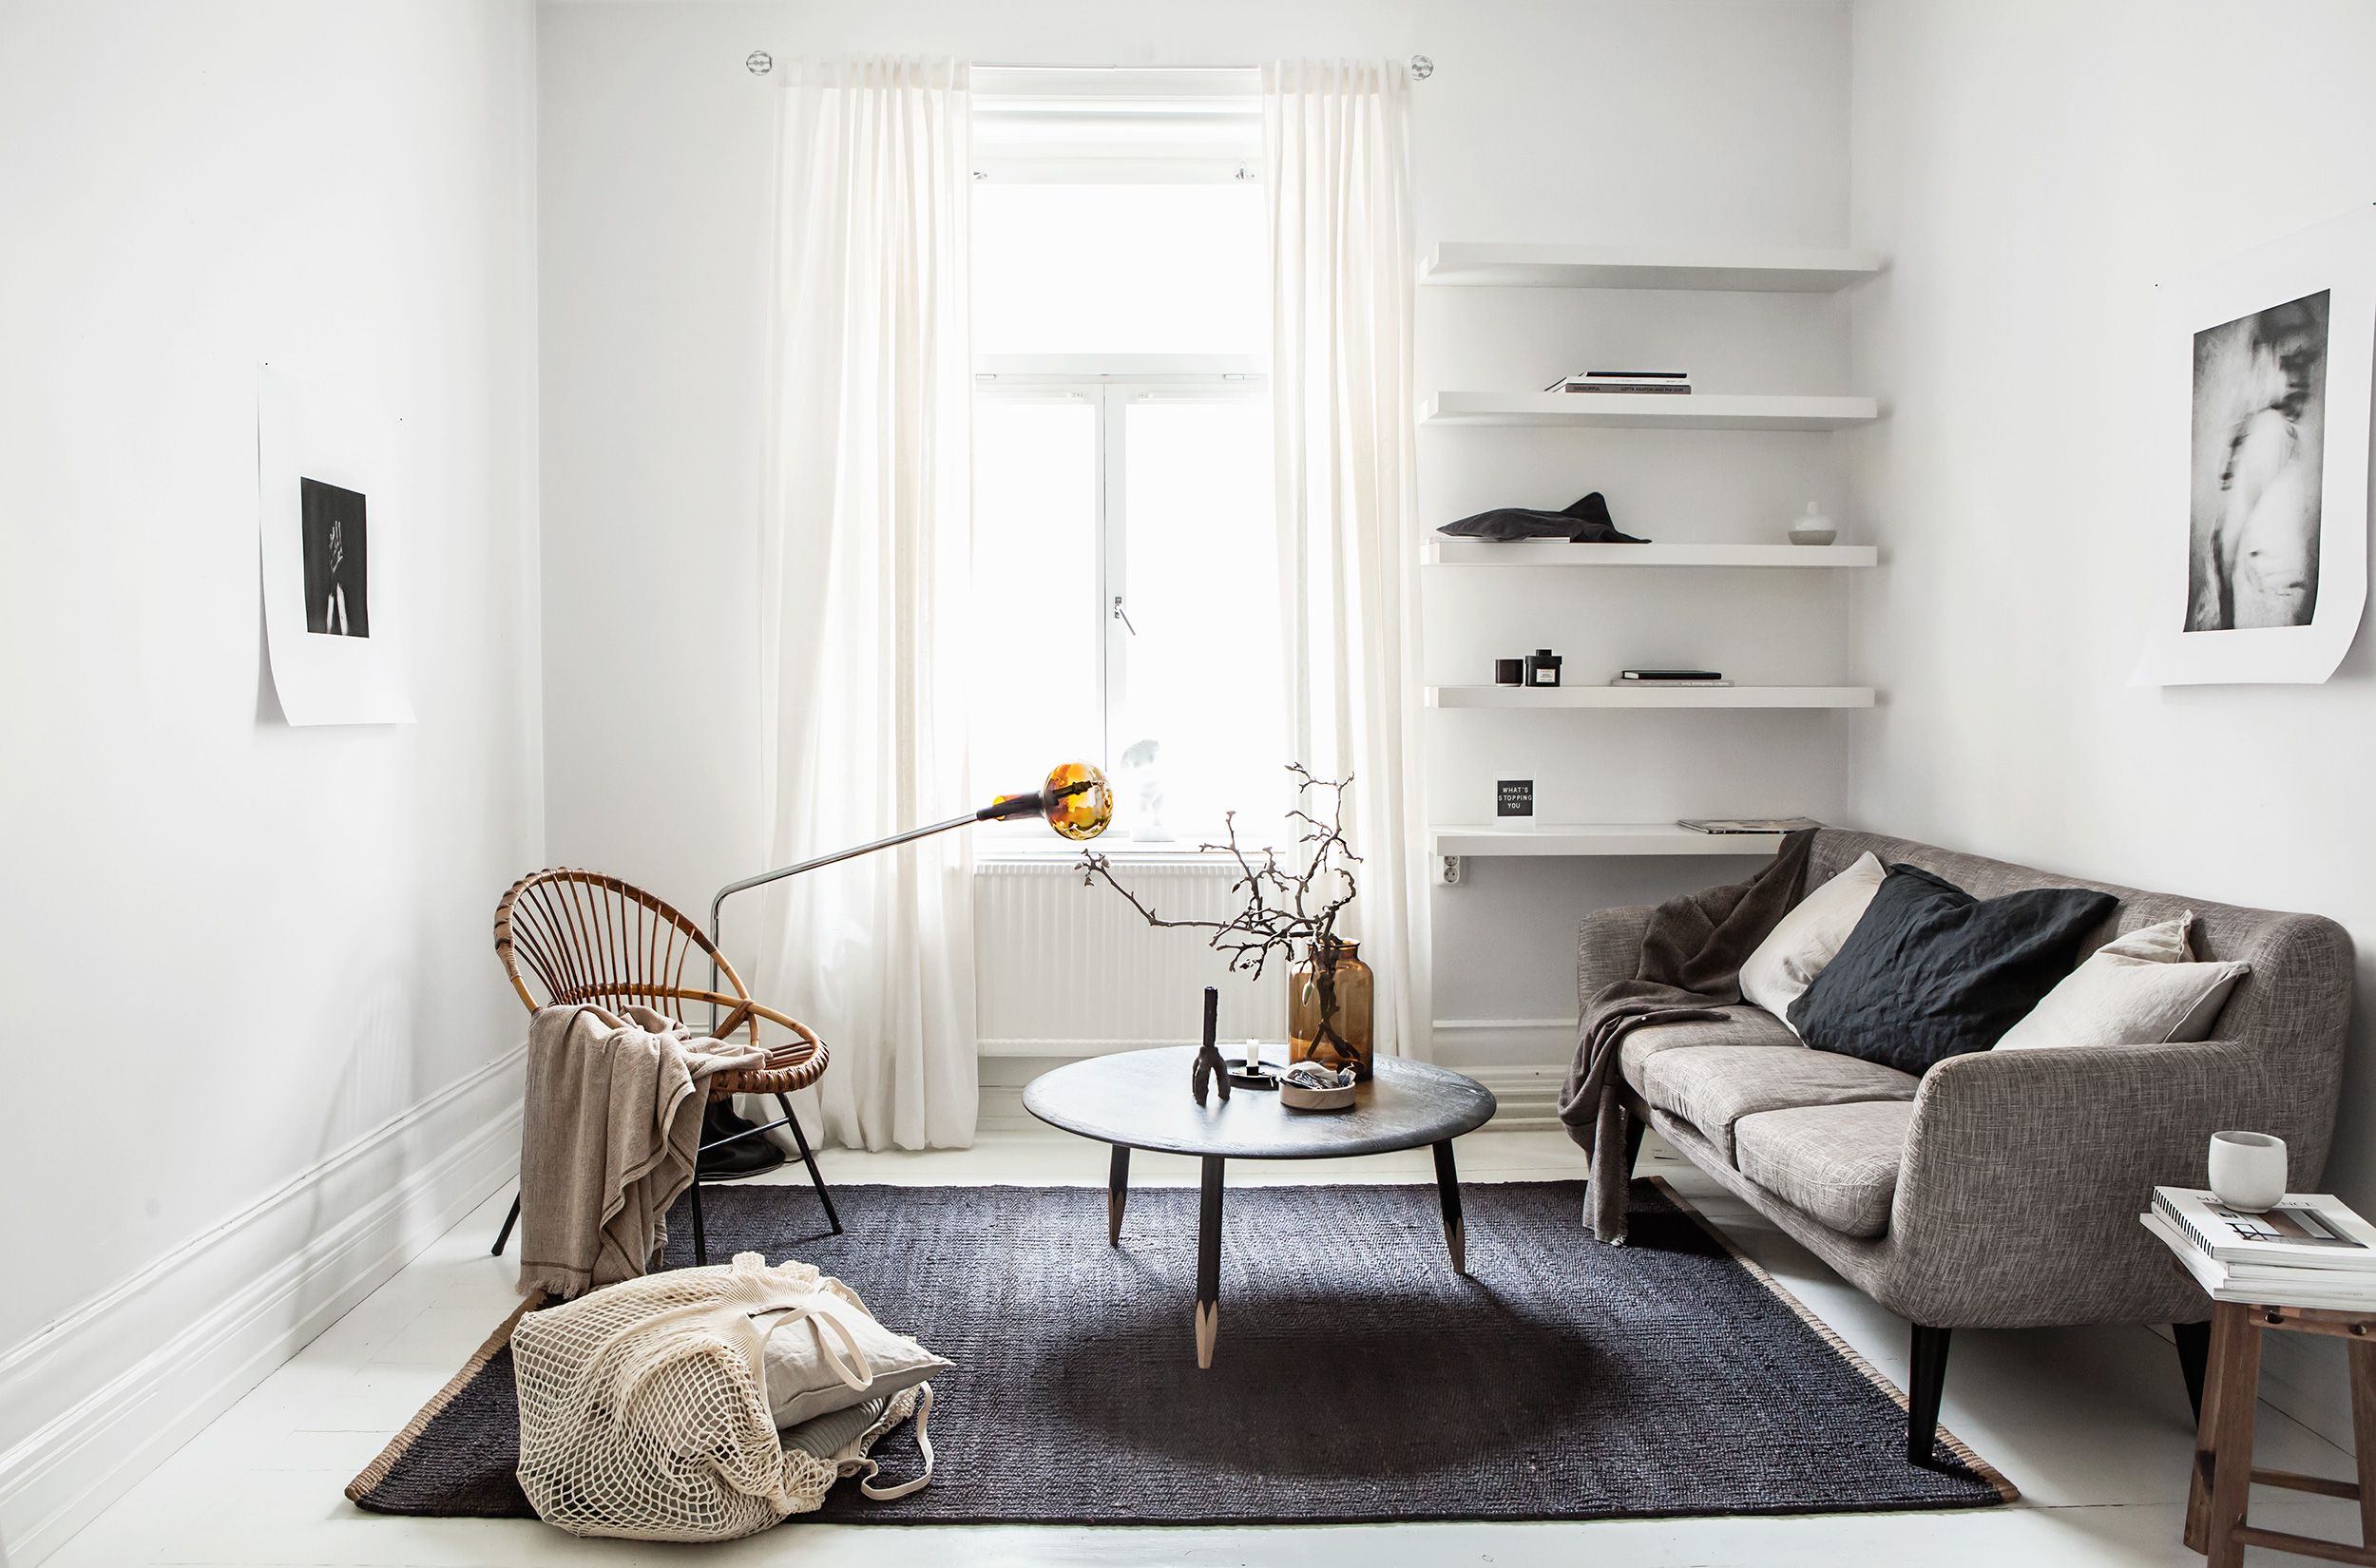 living room light and fan minimalist